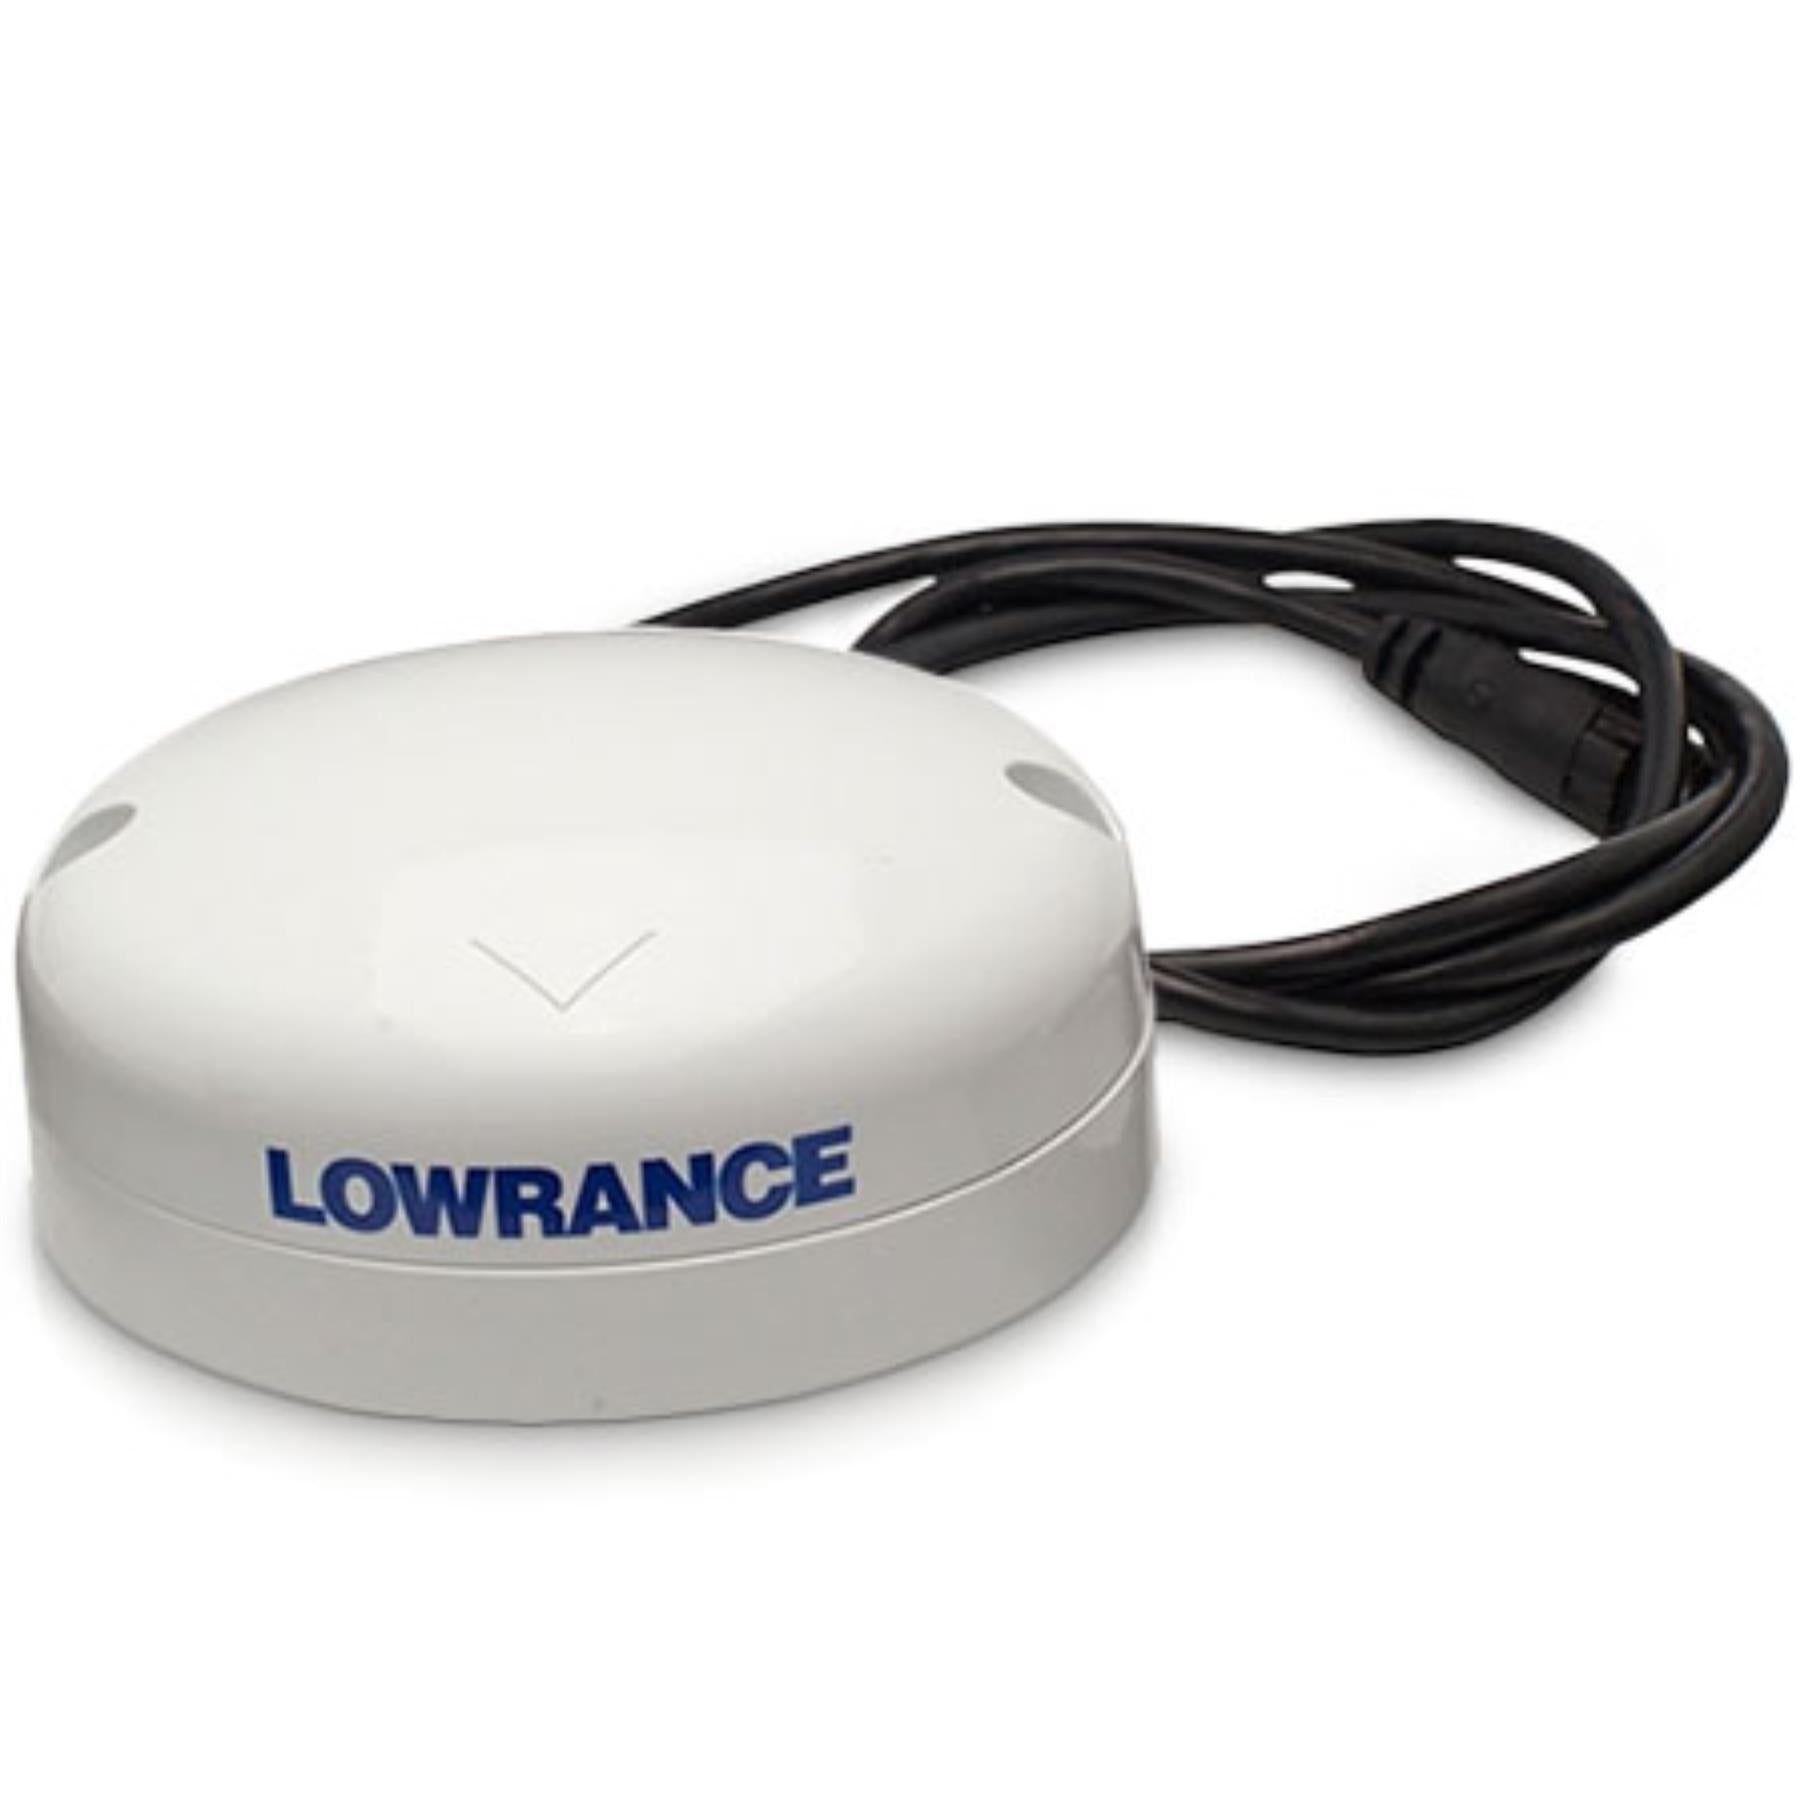 Lowrance sonic hub 2 and point 1 gps antenna